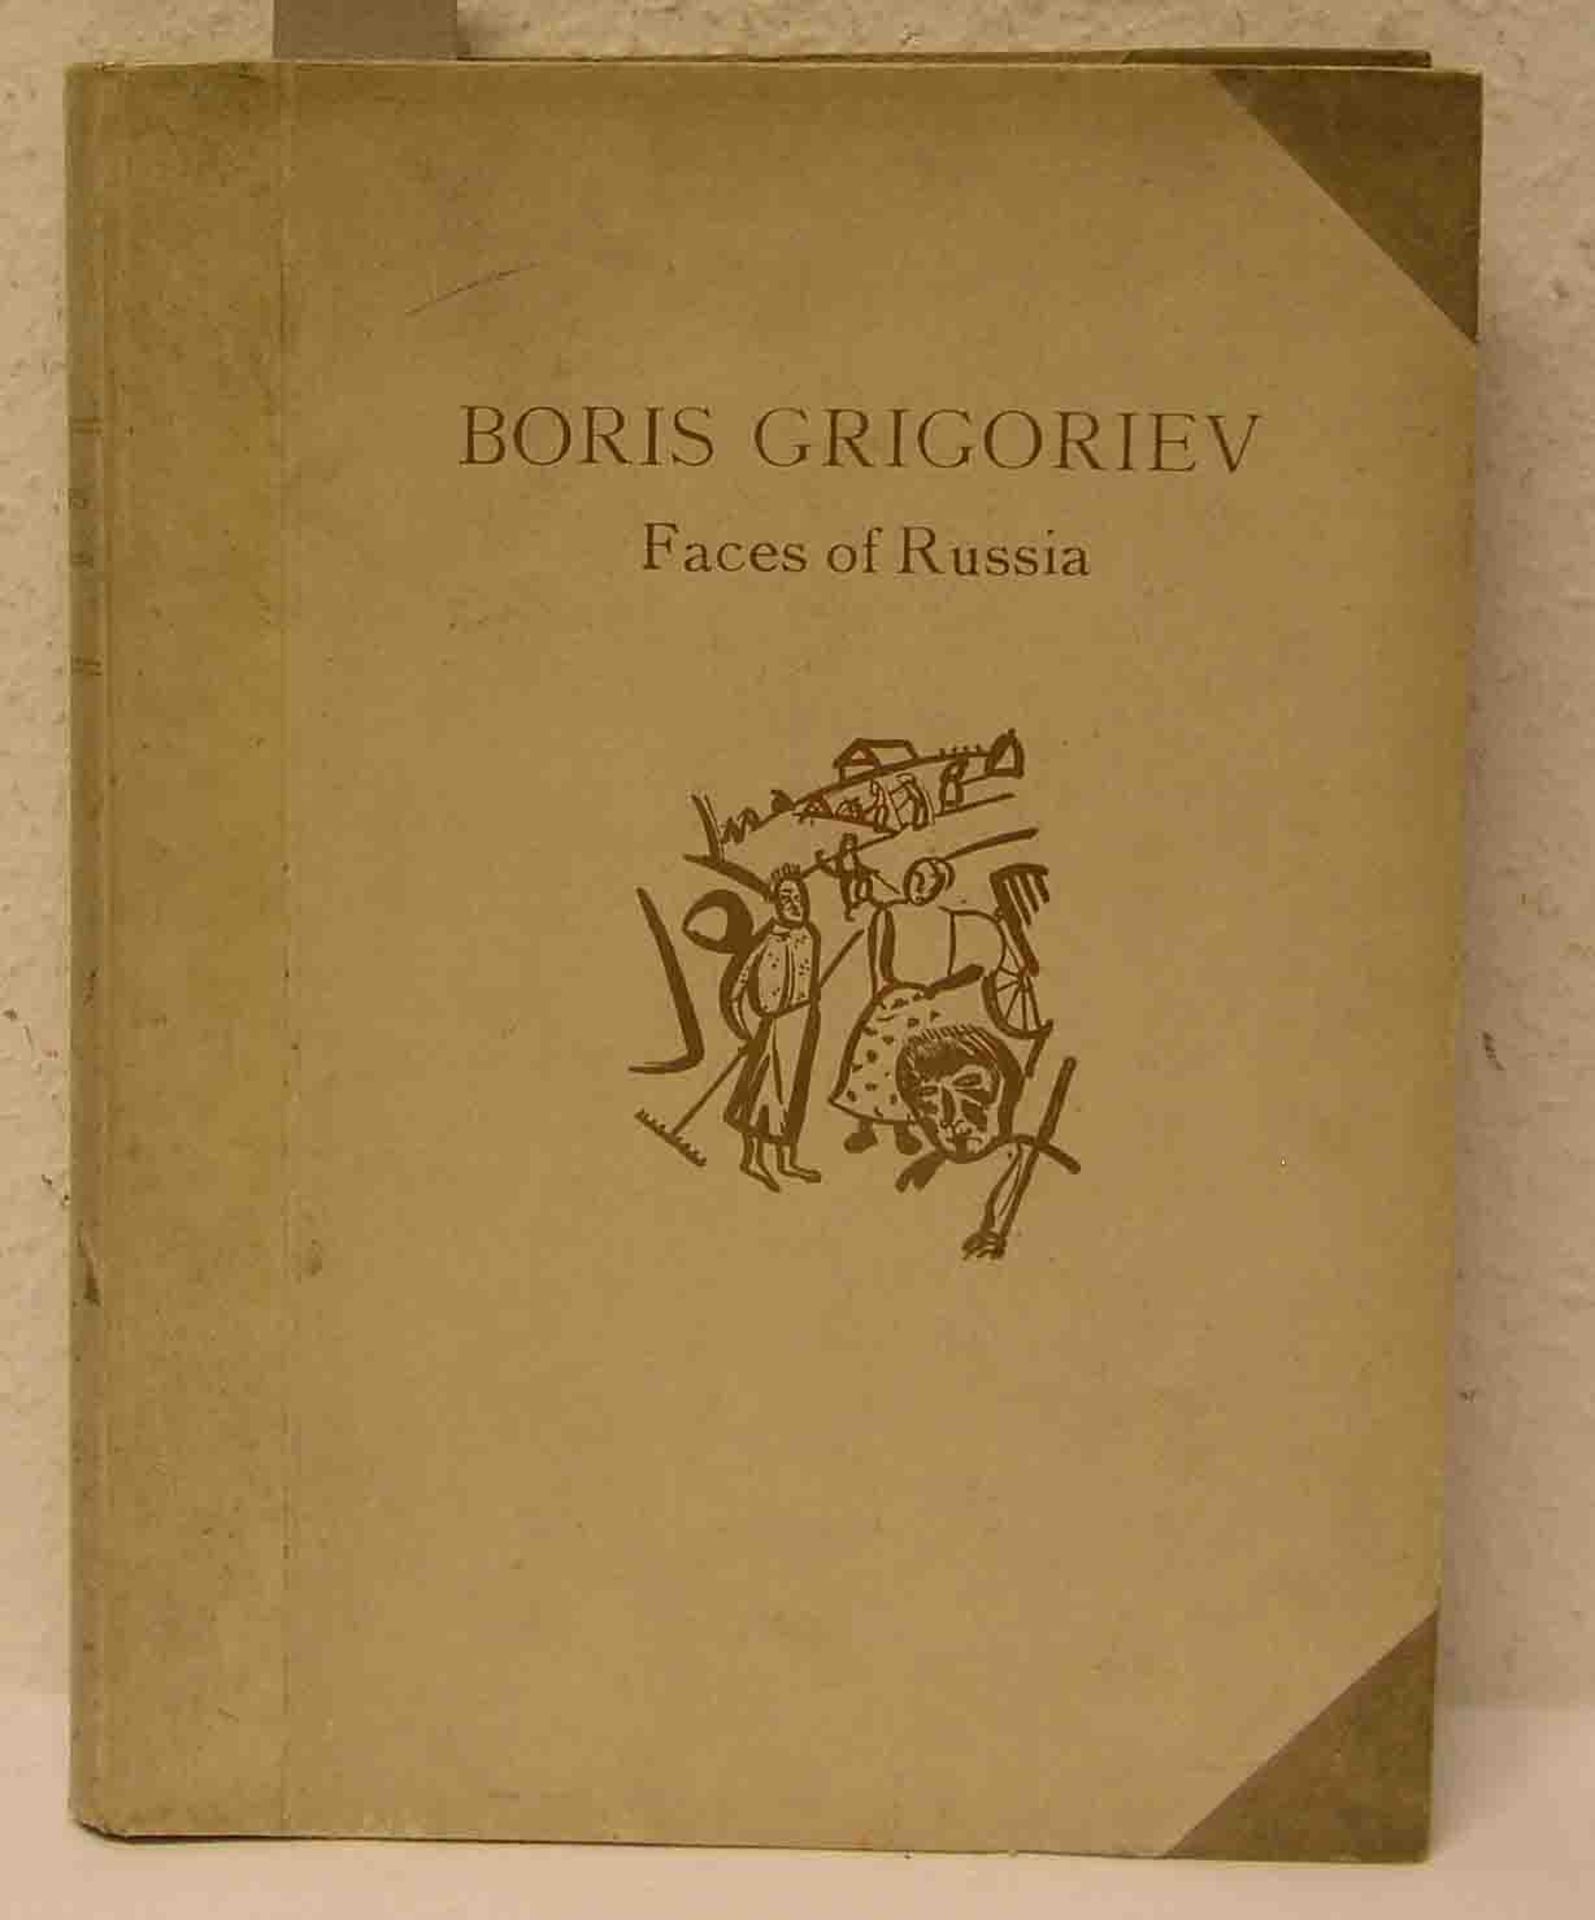 Grigoriev, Boris: "Faces of Russia". Limitiert auf 50 Stück, printed for the U.S.A. inBerlin by